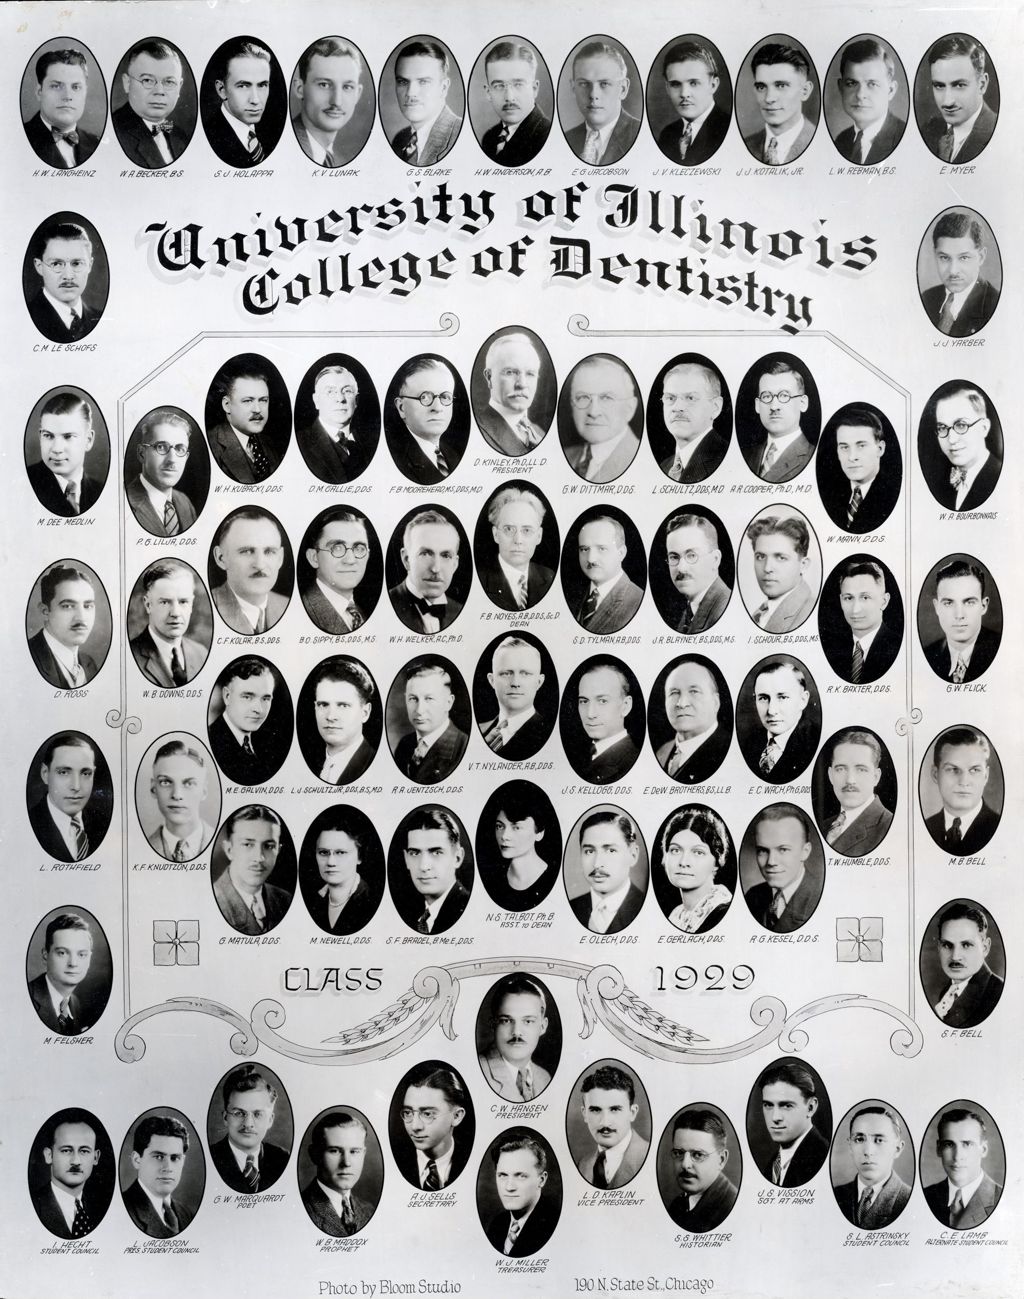 Miniature of 1929 graduating class, University of Illinois College of Dentistry